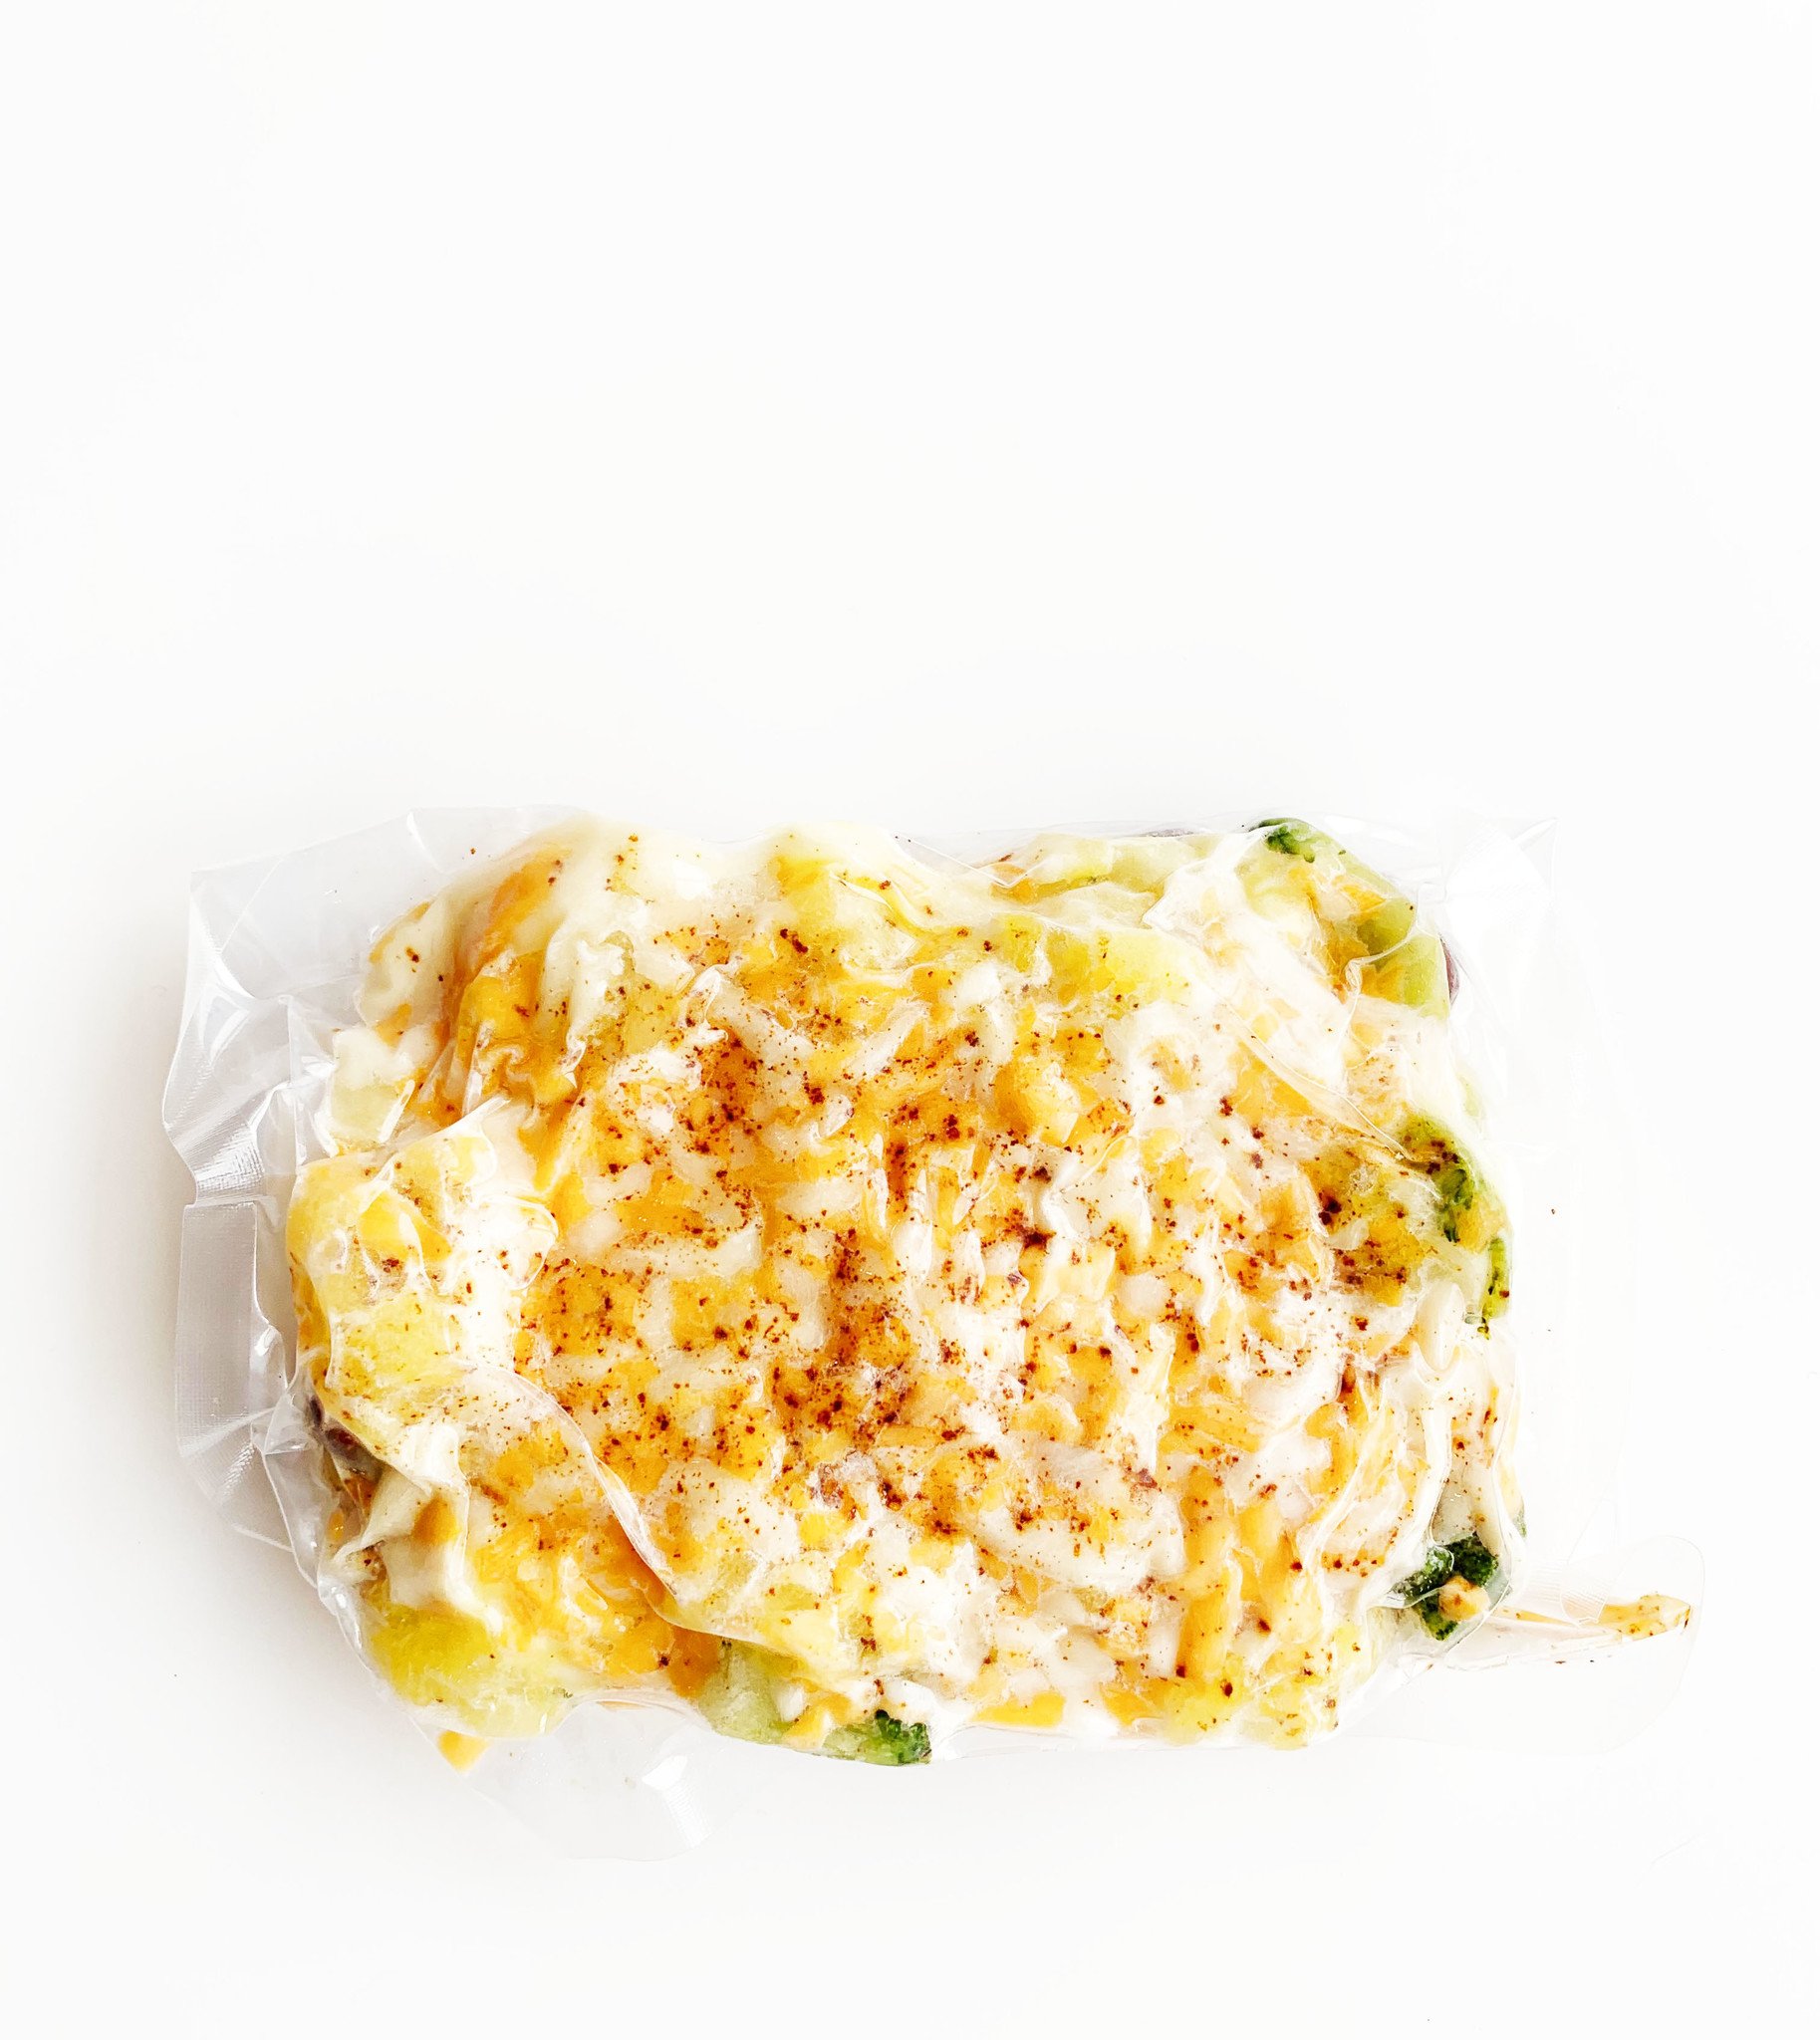 Mexican-style vegetarian breakfast cassolette